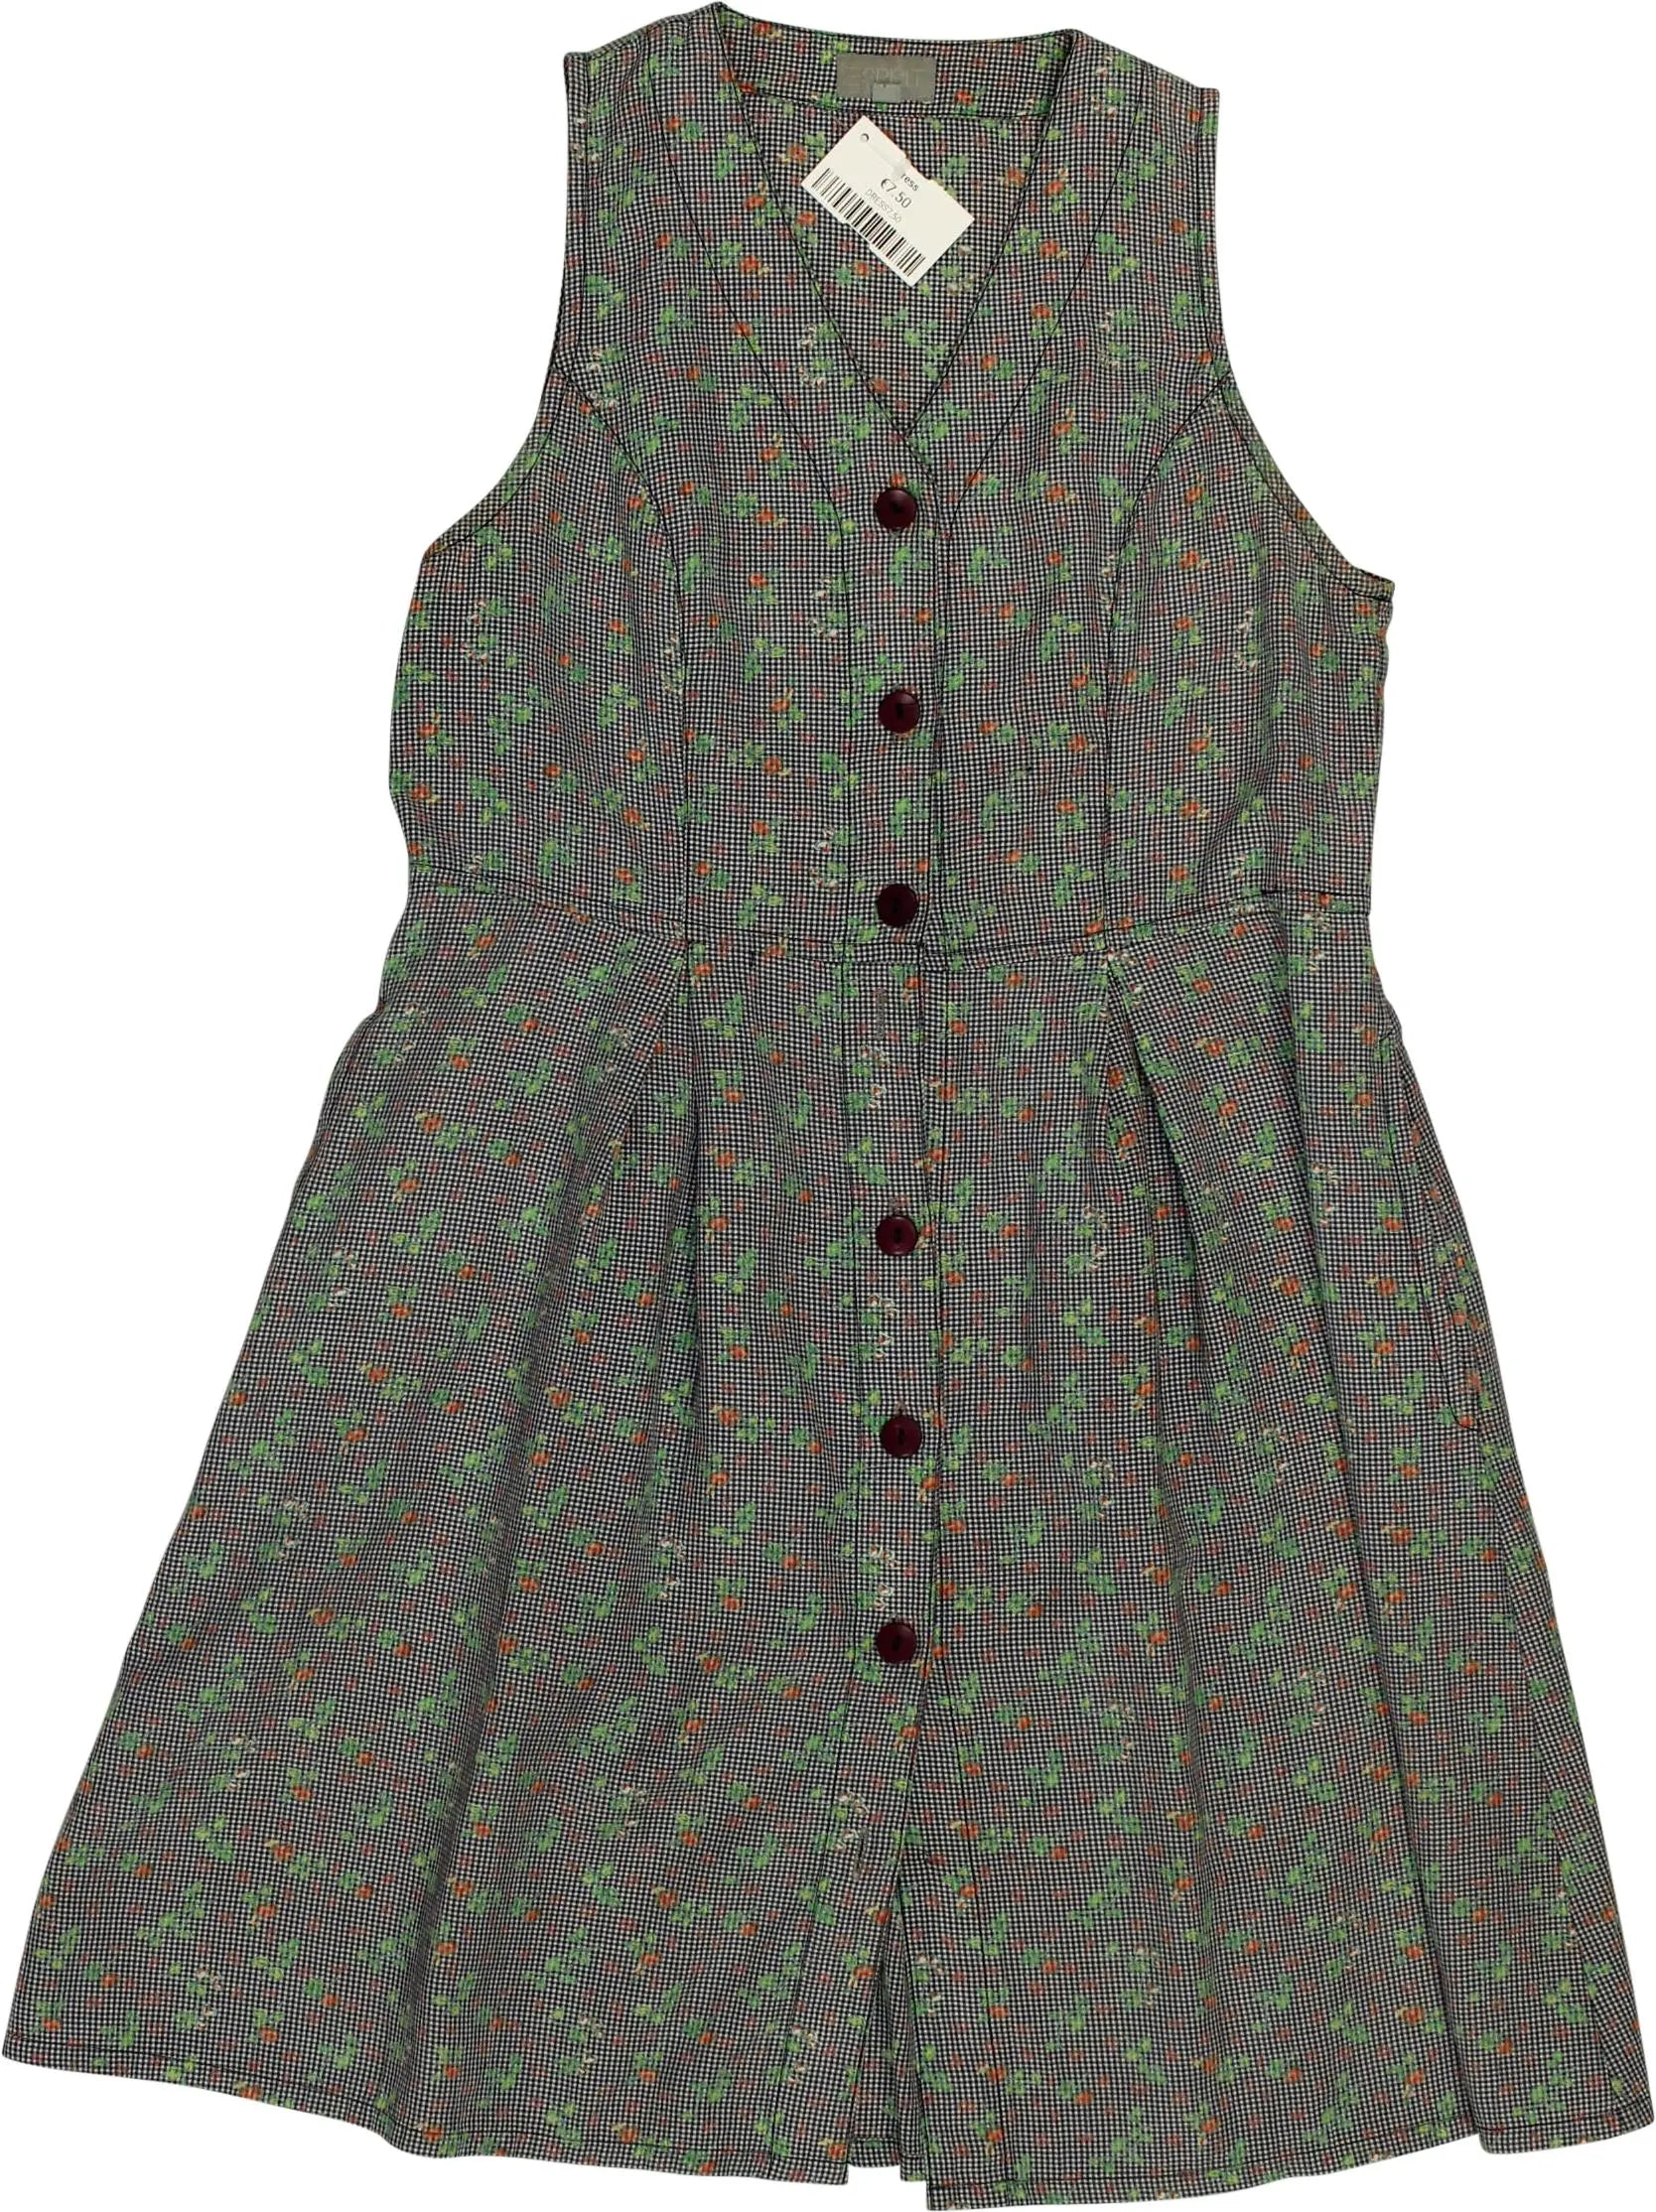 Esprit - Floral dress- ThriftTale.com - Vintage and second handclothing